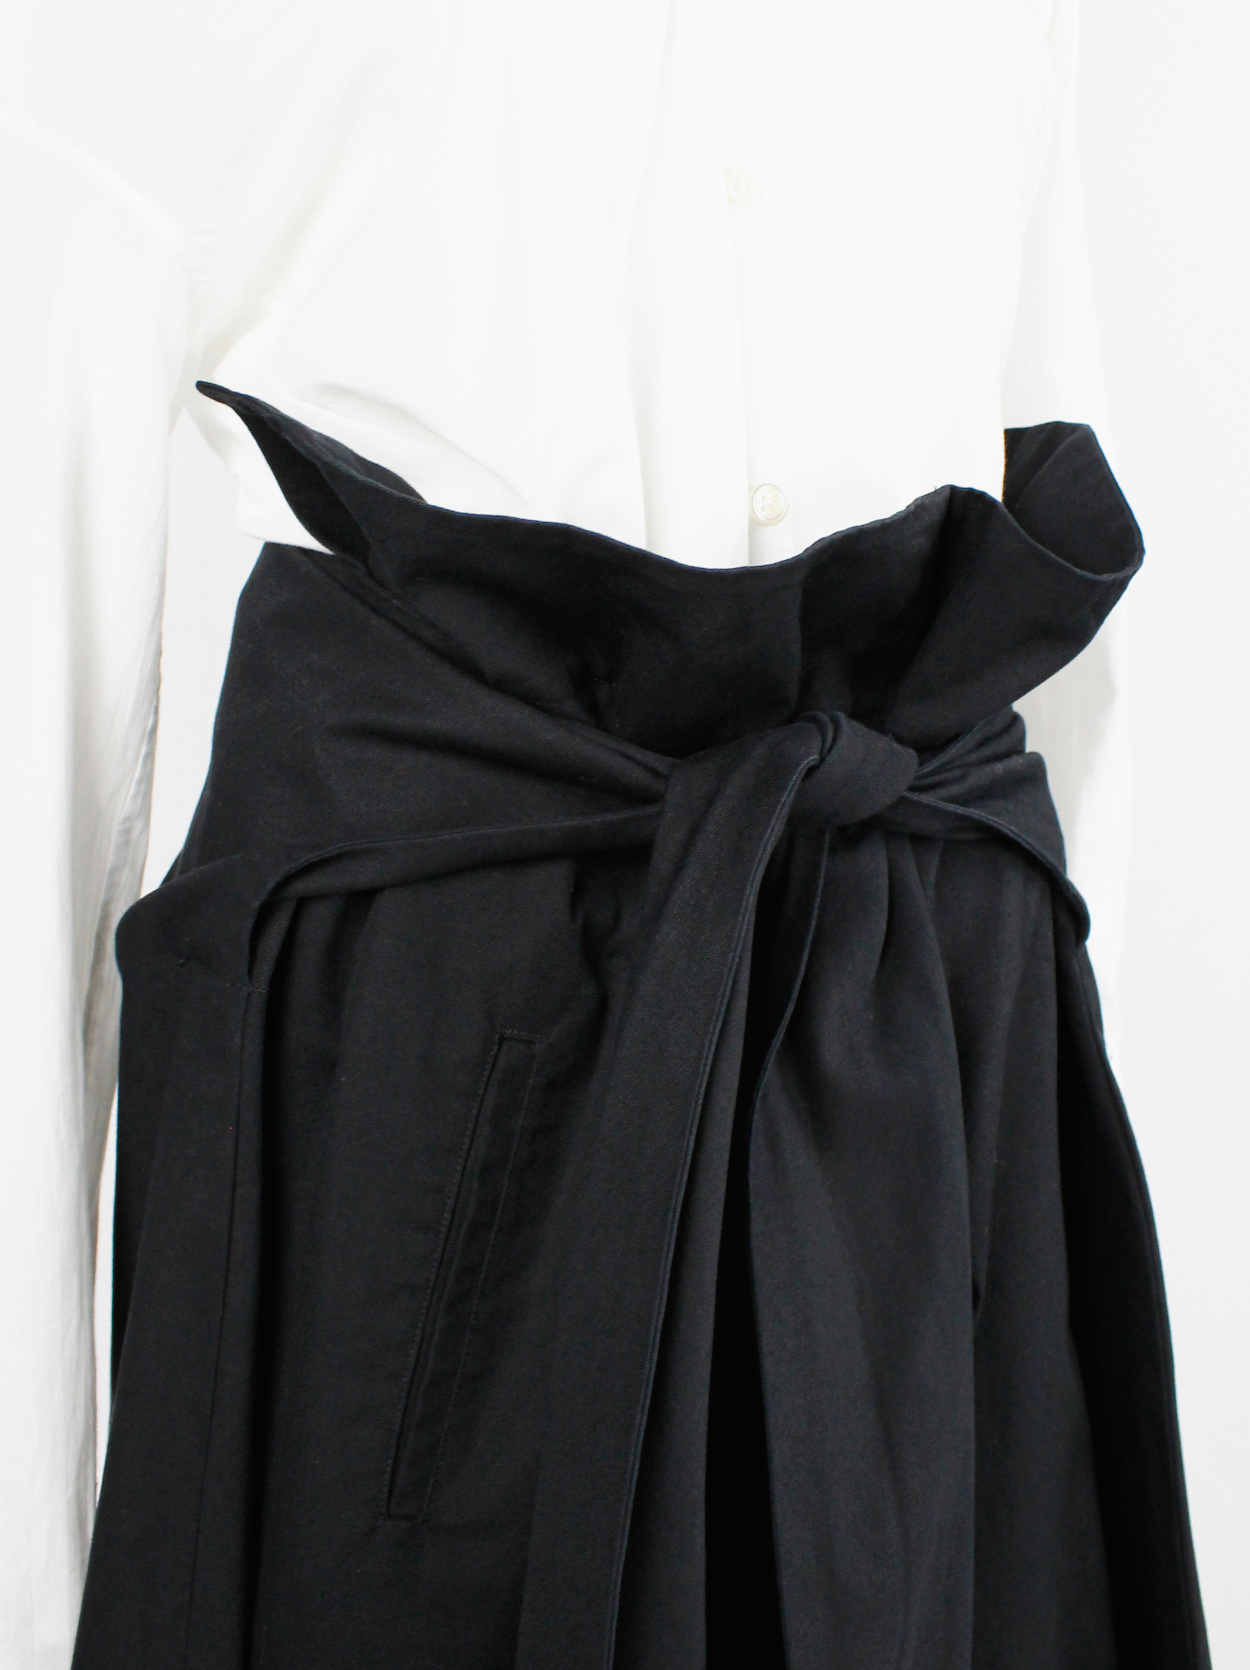 Y's Yohji Yamamoto black voluminous skirt with front ties and paperbag ...